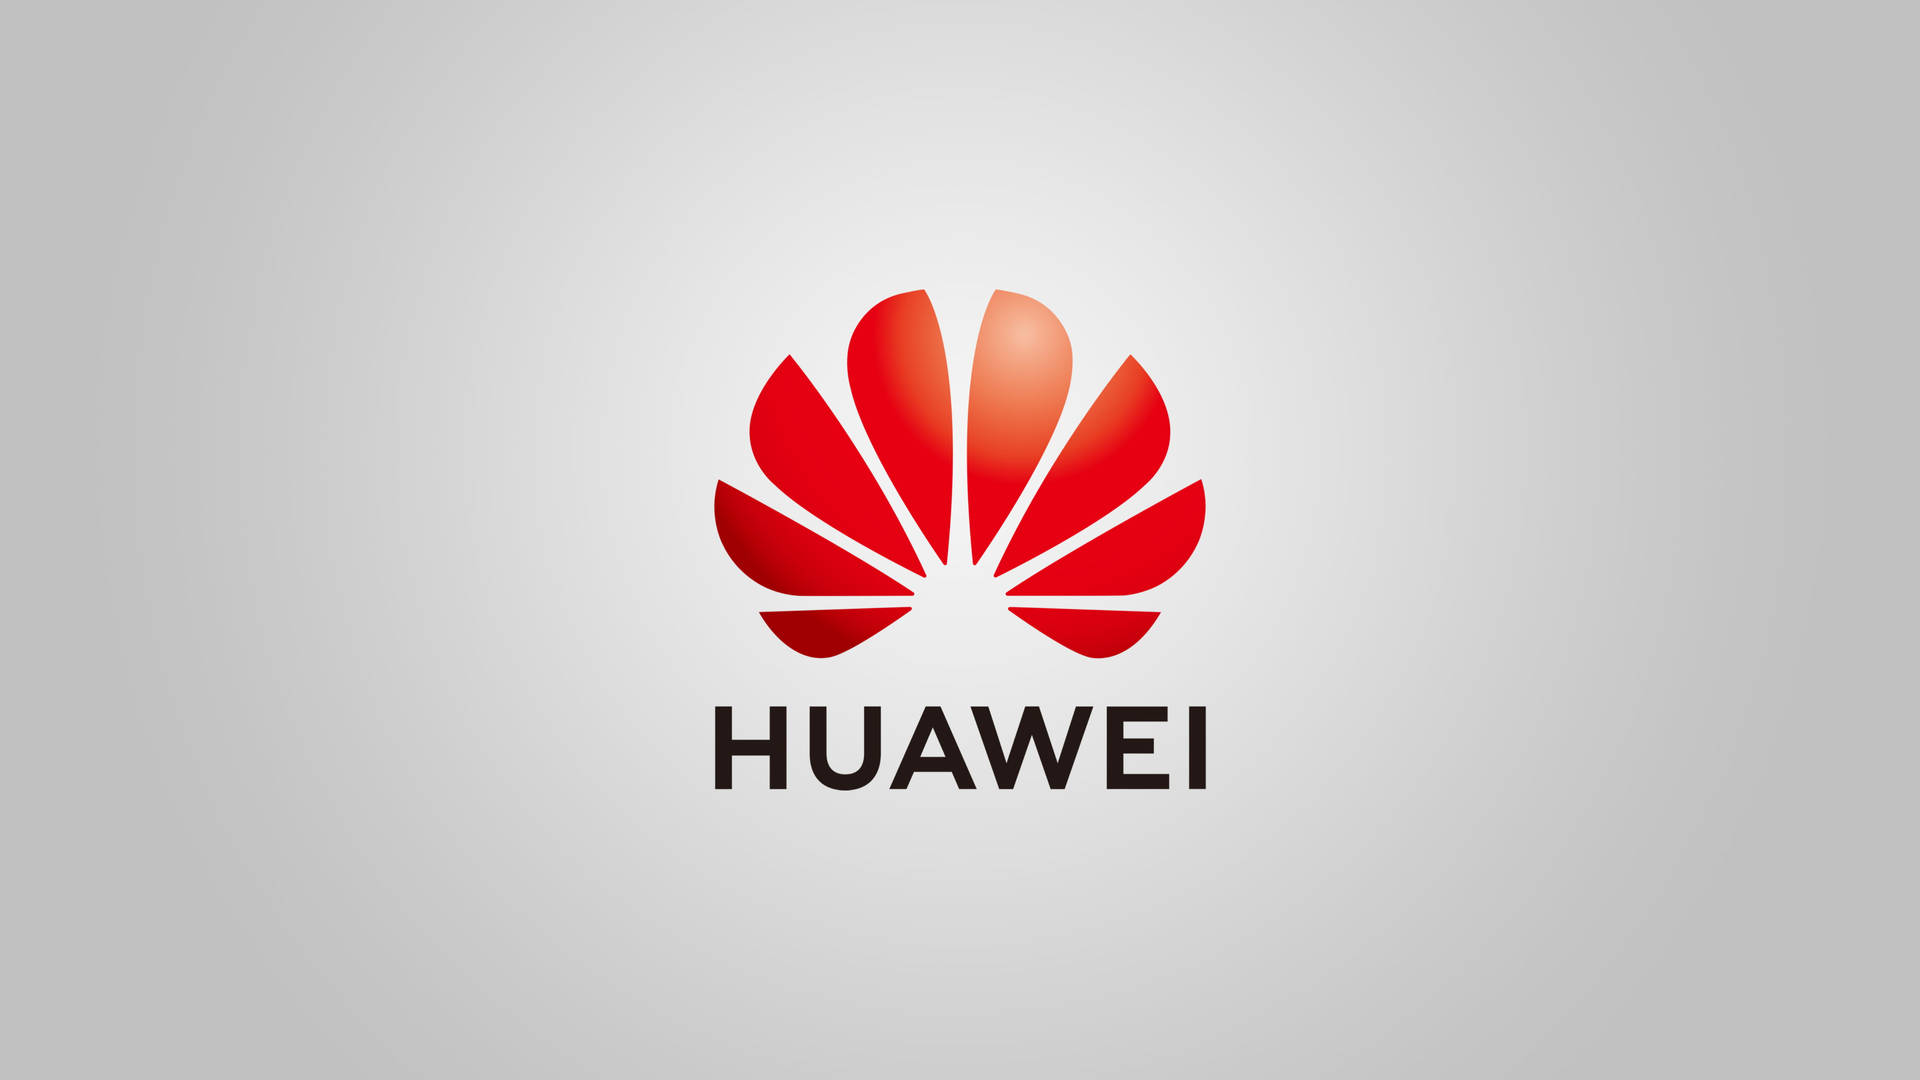 Huawei China Brand Art Background